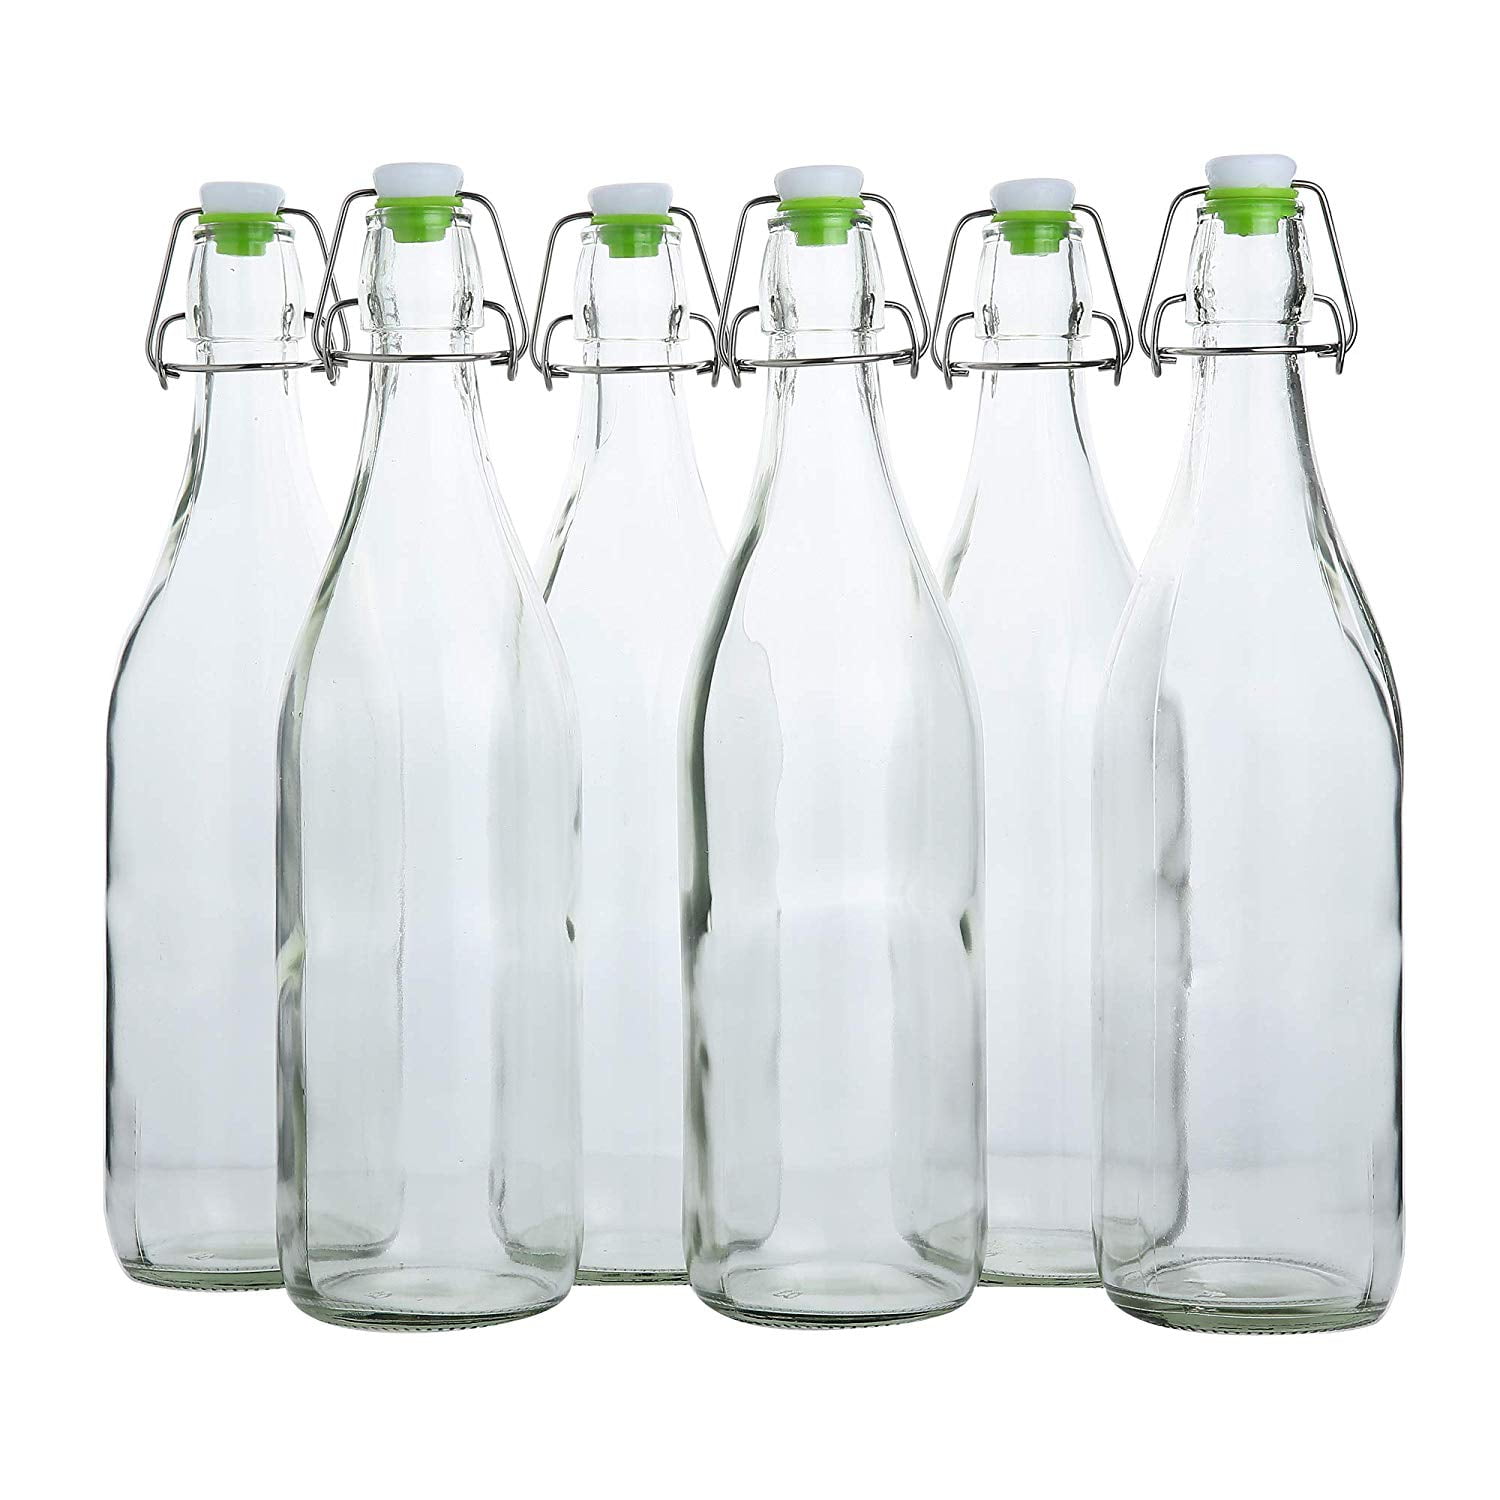 Flip Top Glass Bottle [1 Liter / 33 fl. oz.] [Pack of 4] Swing Top Brewing  Bottle with Stopper for Beverages, Oil, Vinegar, Kombucha, Beer, Water